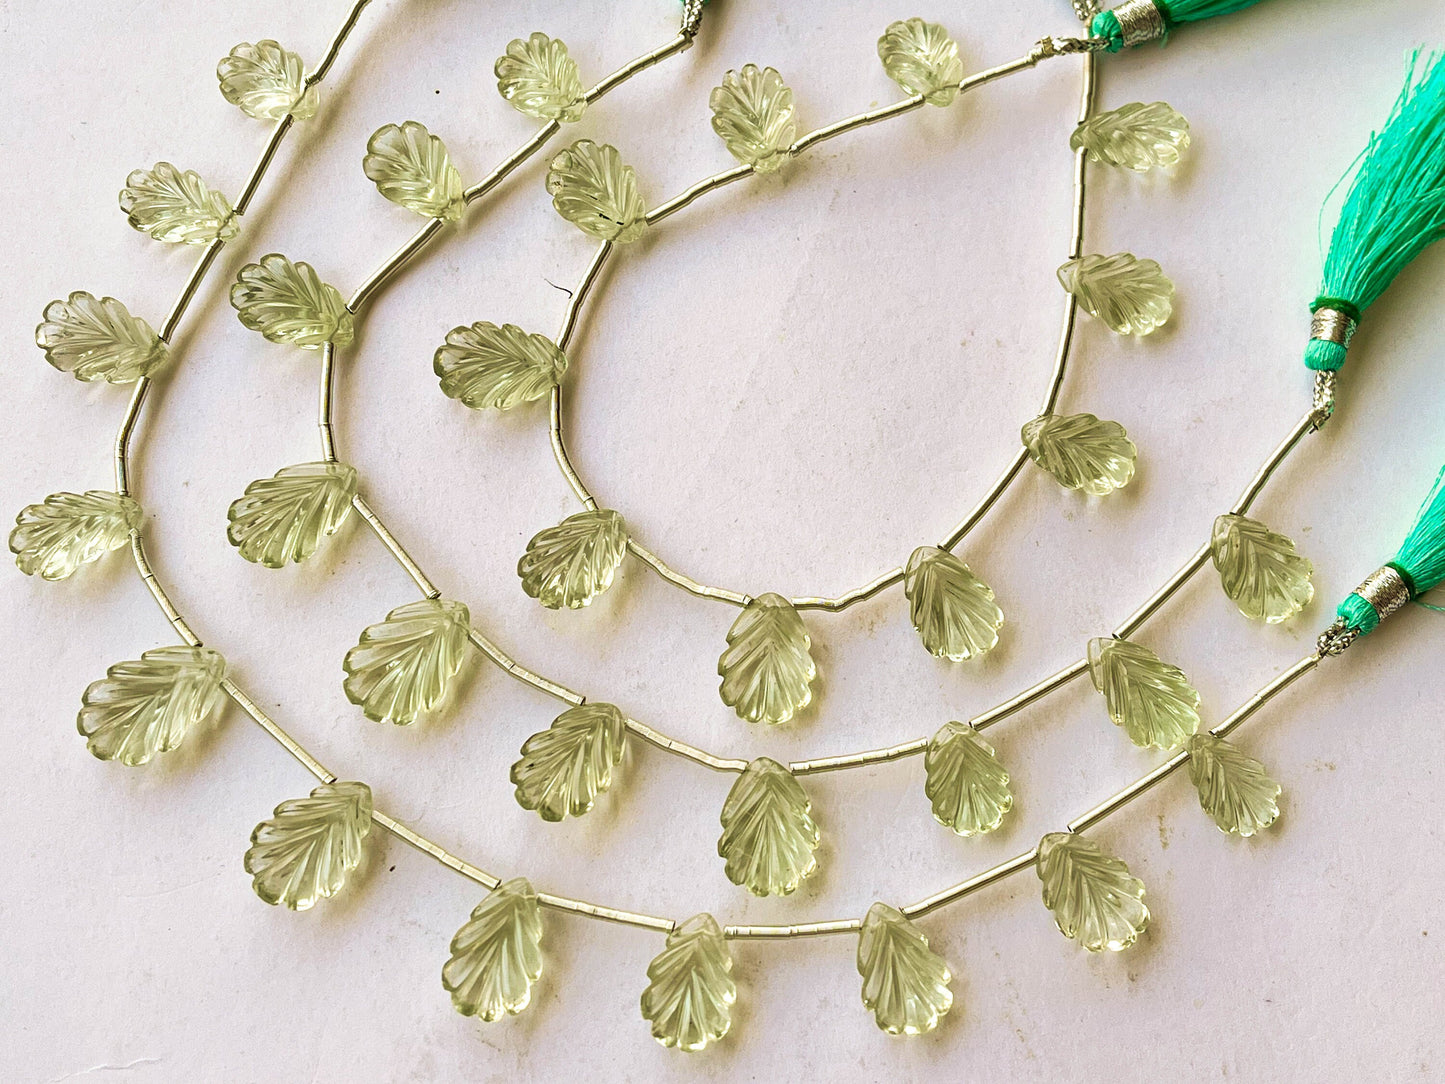 Green Amethyst Carved Briolette Beads